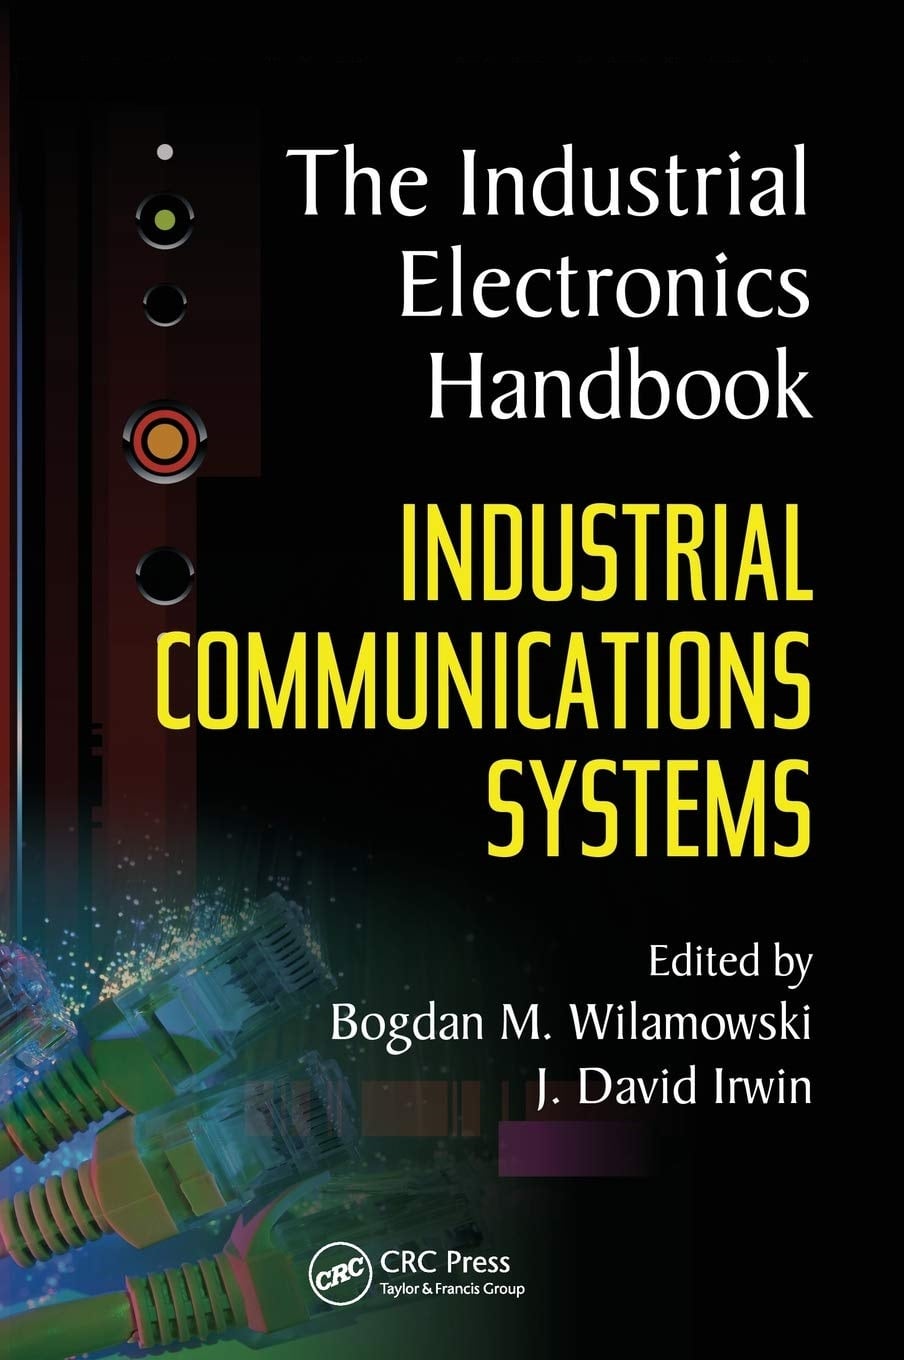 (PDF) The Industrial Electronics Handbook Fundamentals Of Industrial